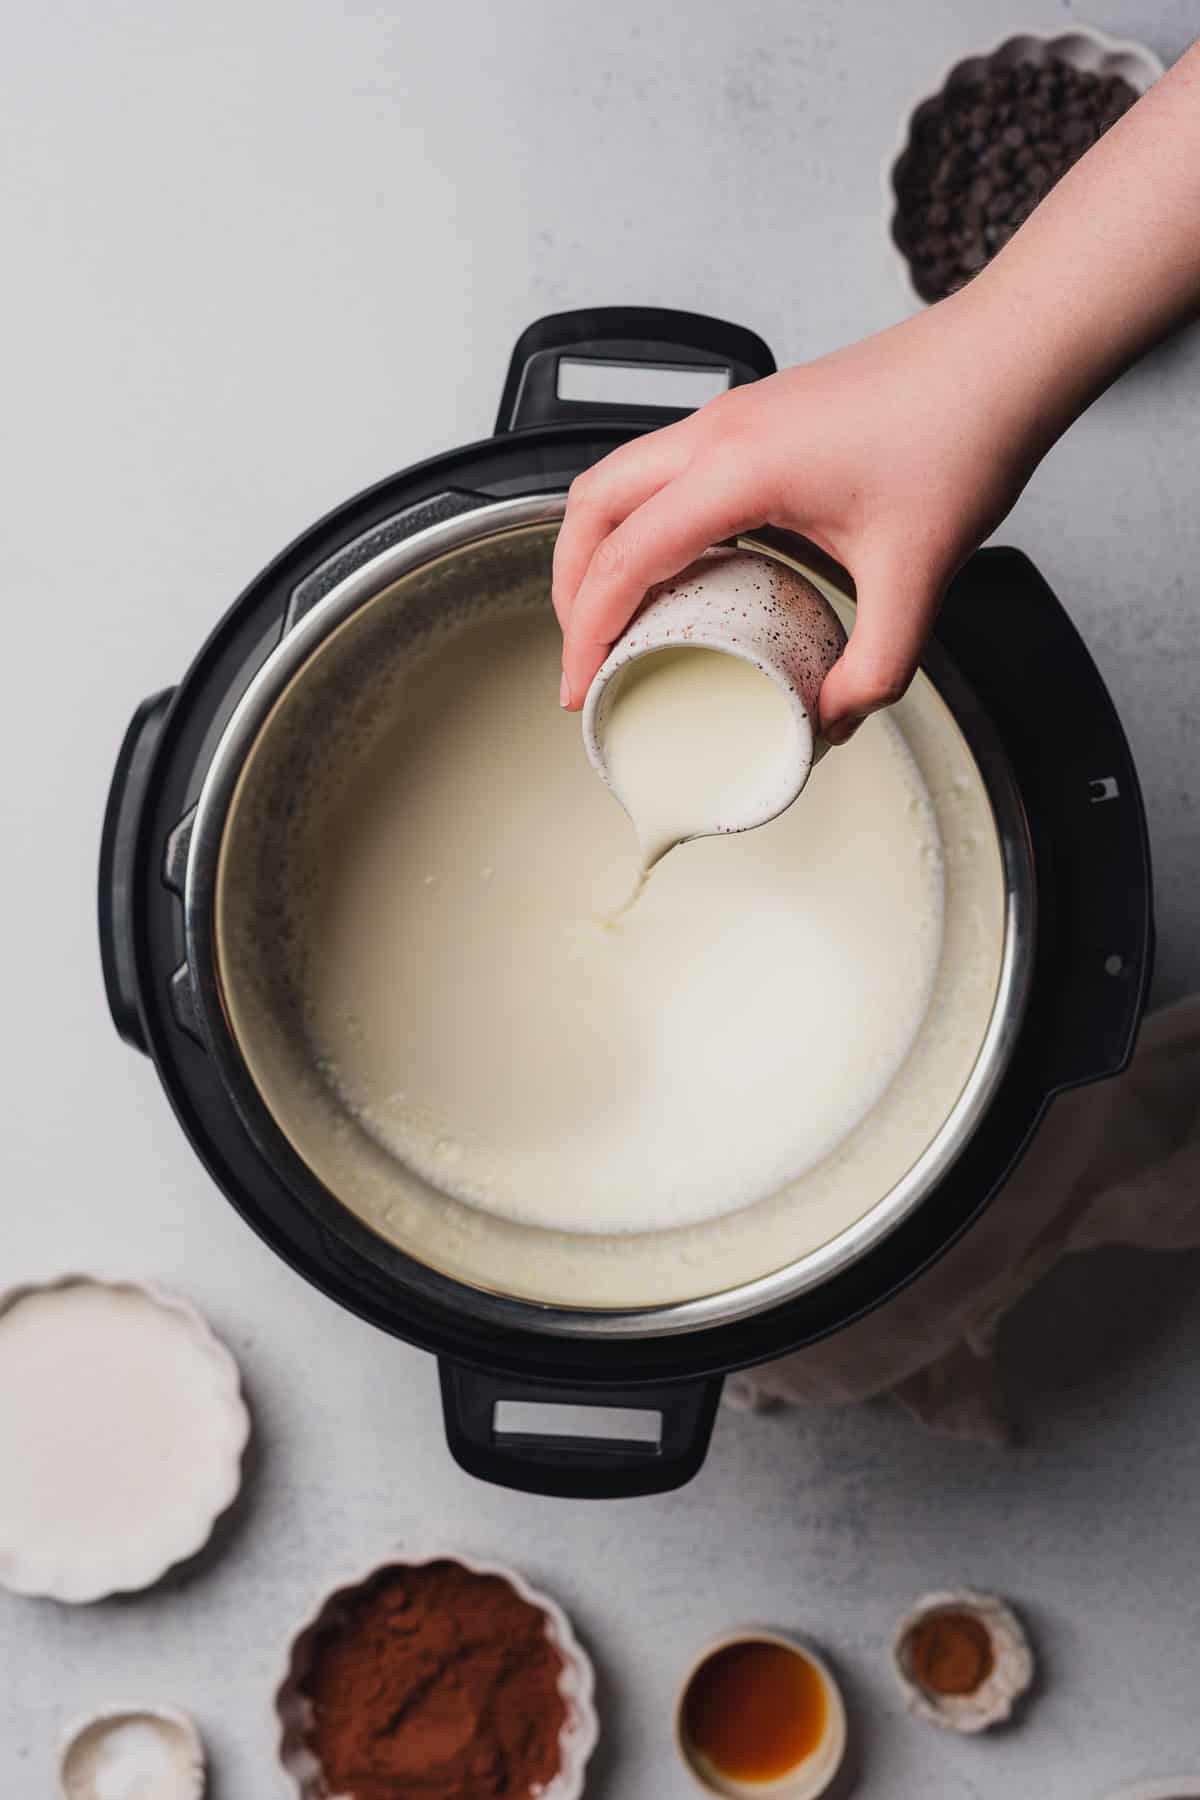 hand poring cream into an instant pot